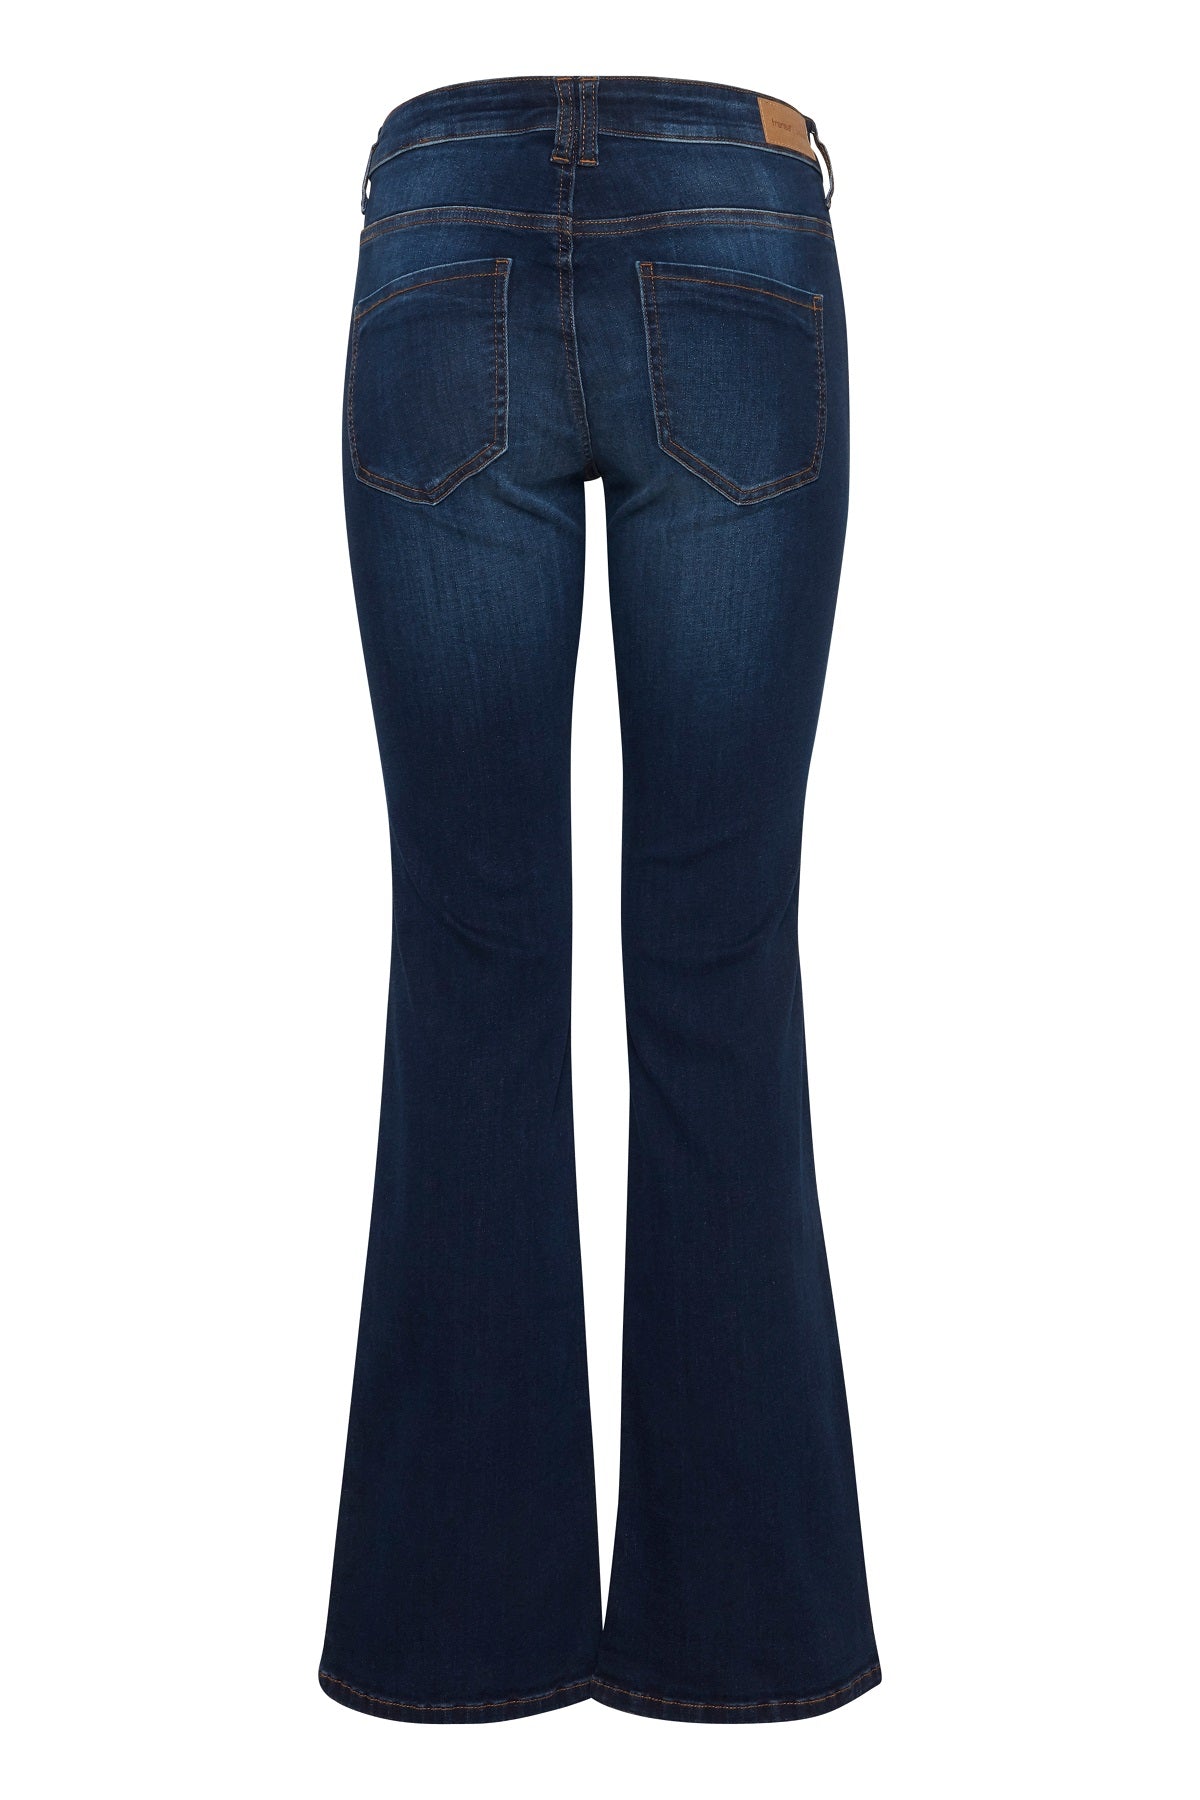 Fransa FRHODEMI 4 Jeans,  Indigo blue denim